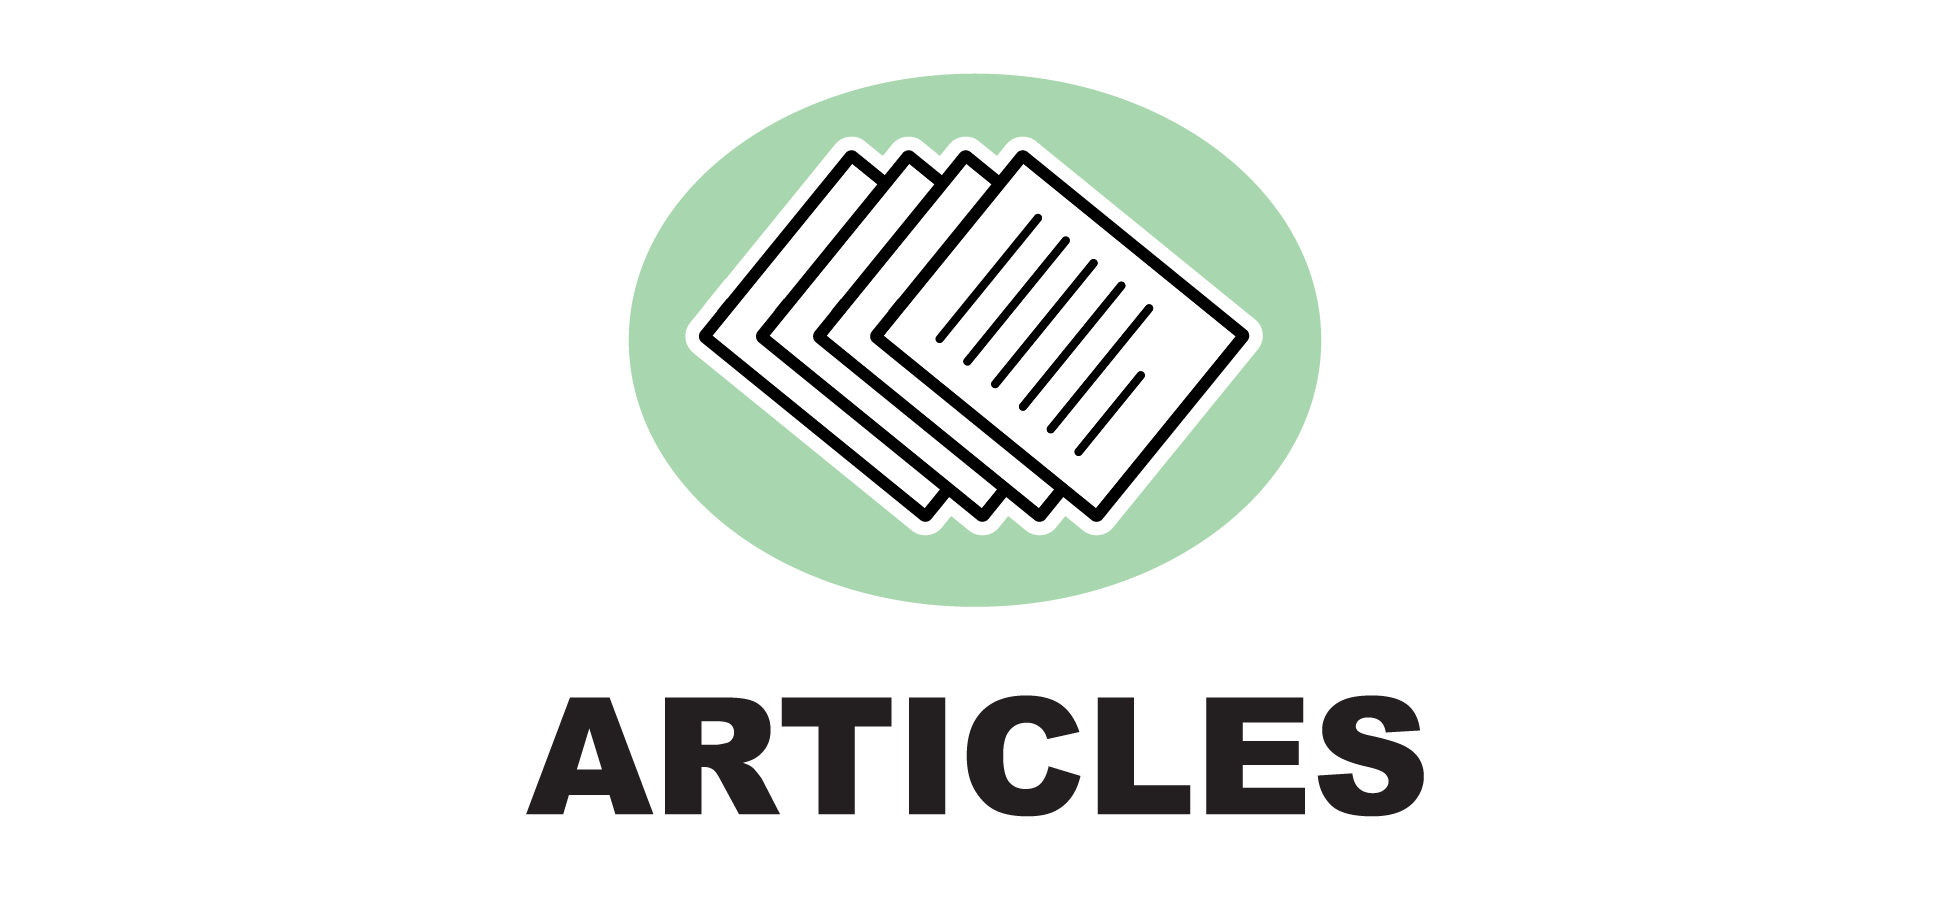 Articles 02- 4C logo